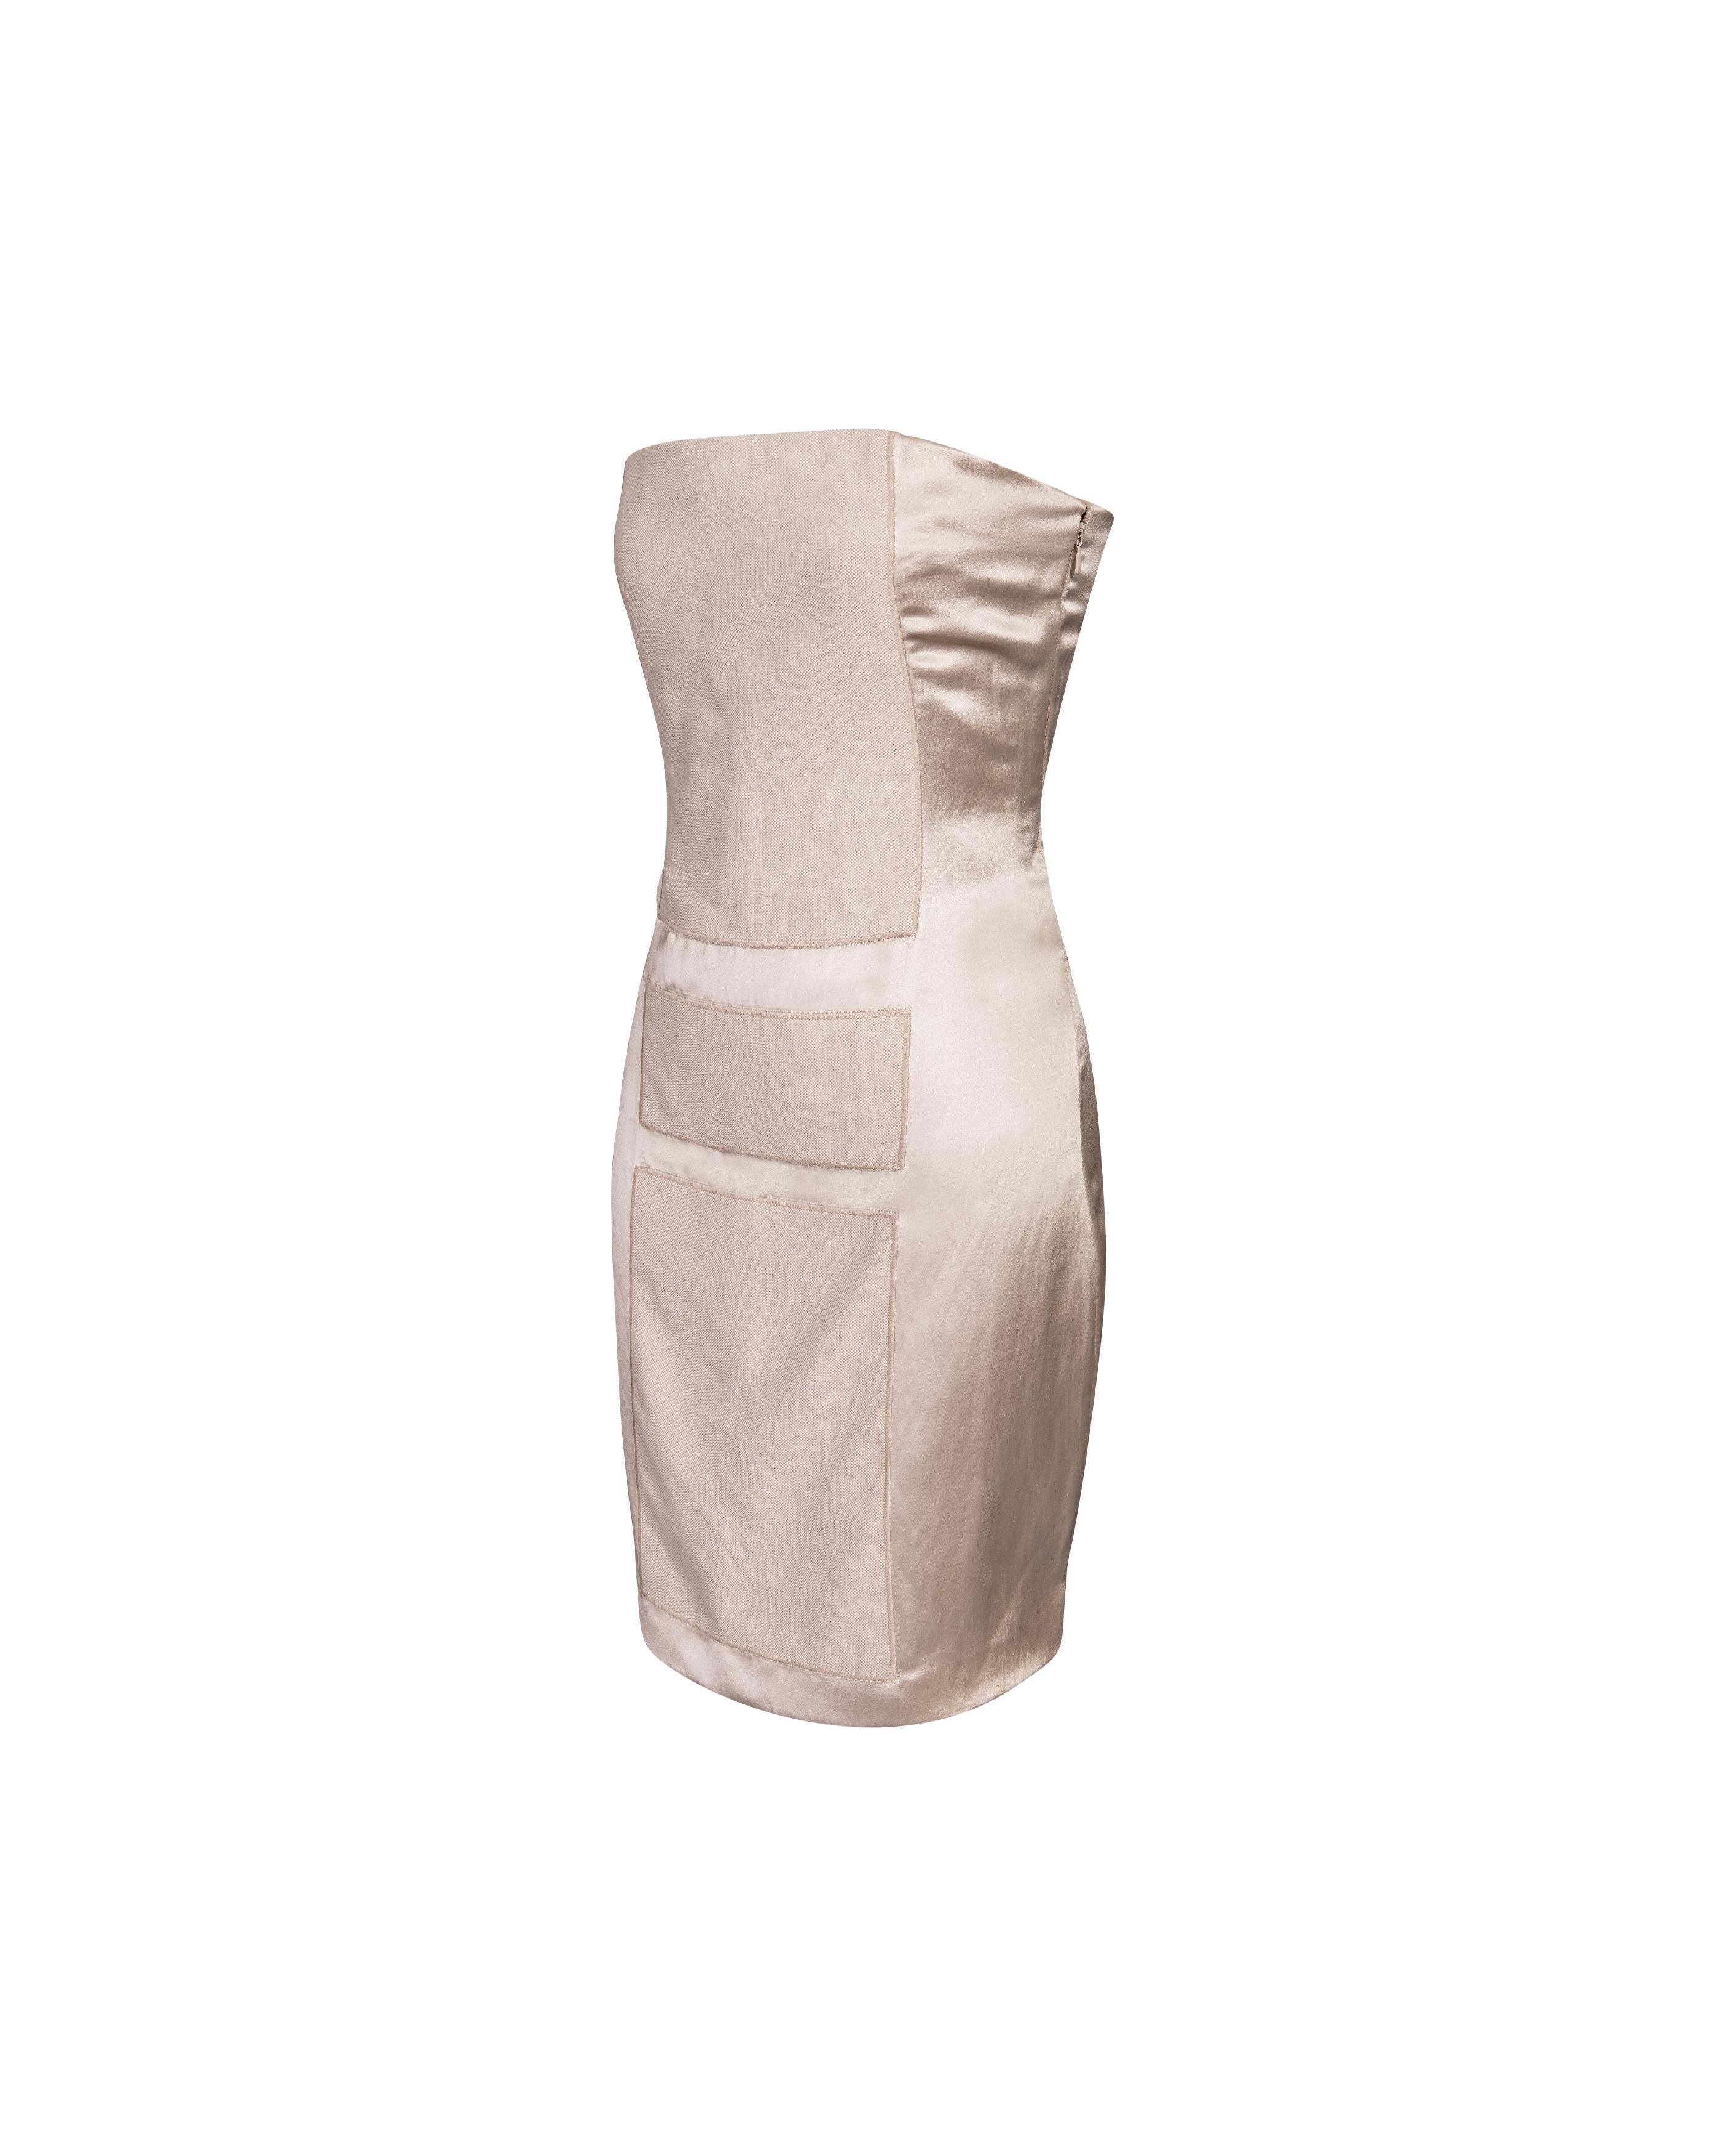 S/S 1998 Prada by Miuccia Prada Silk Satin Strapless Geometric Block Mini Dress In Good Condition For Sale In North Hollywood, CA